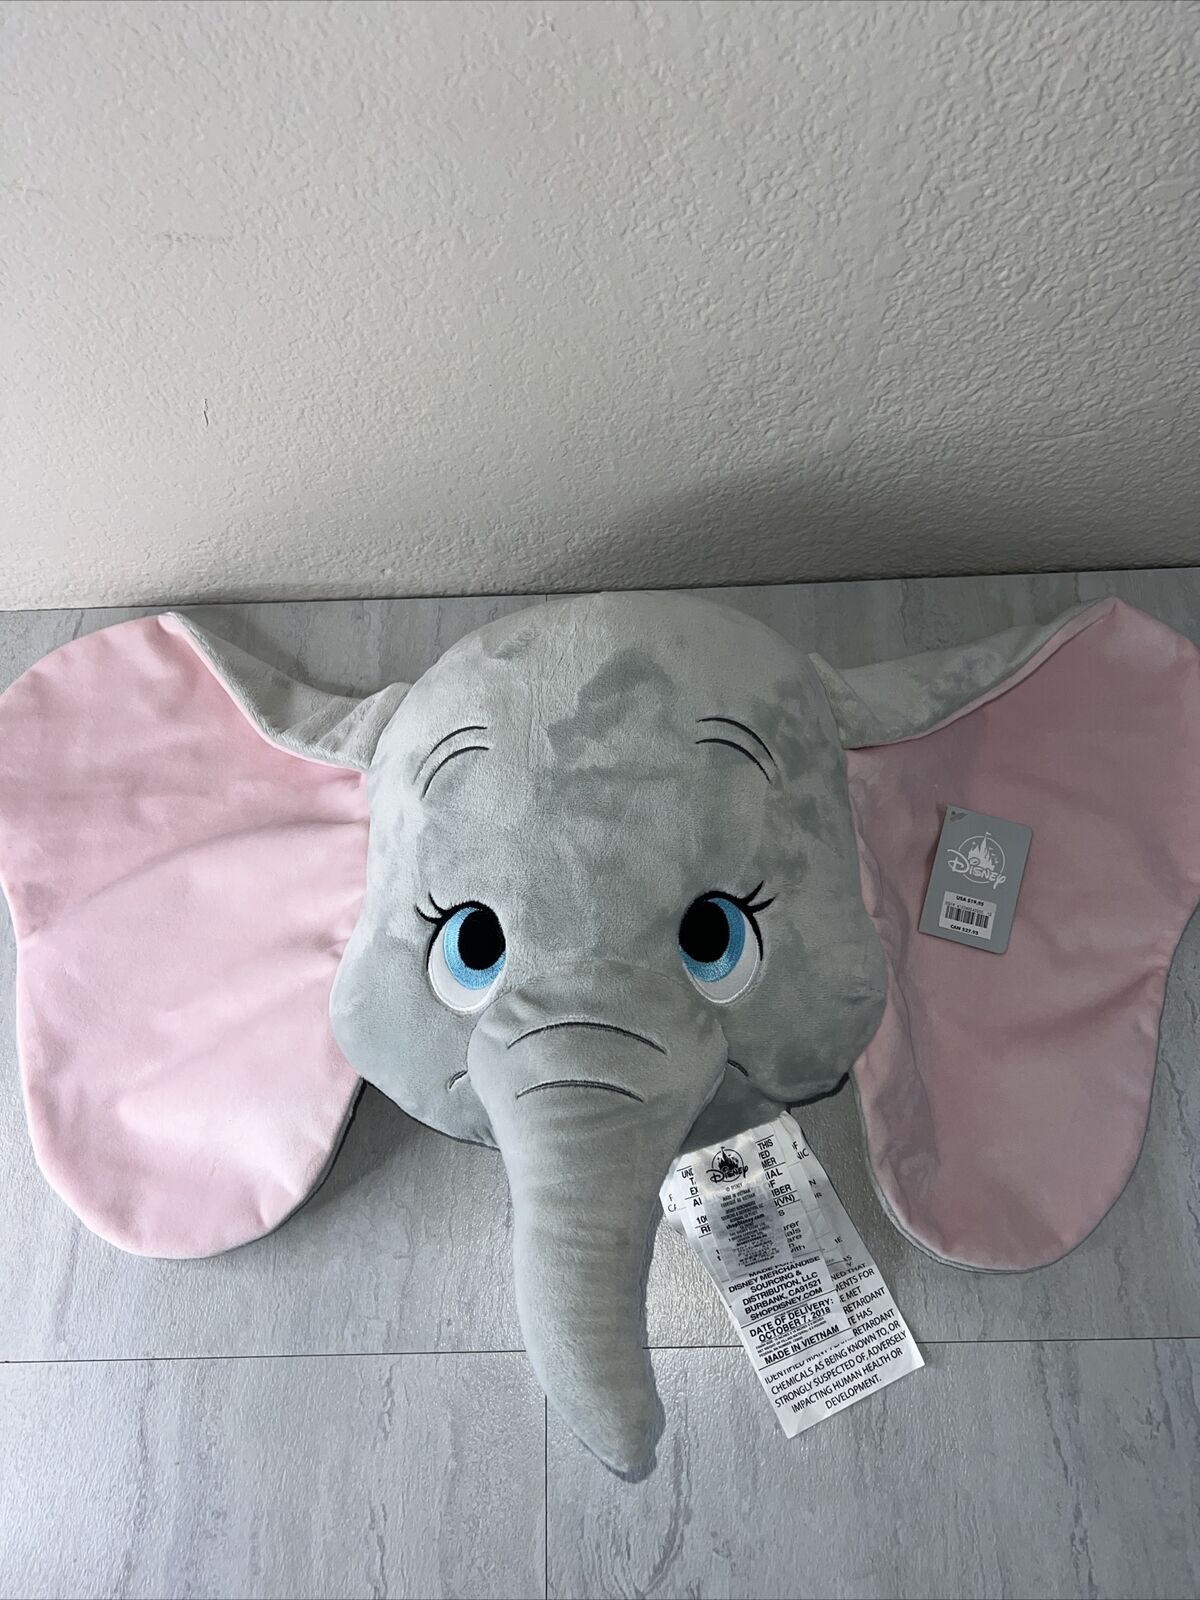 Authentic Disney Store Dumbo Plush Toy Pillow Cushion NWT